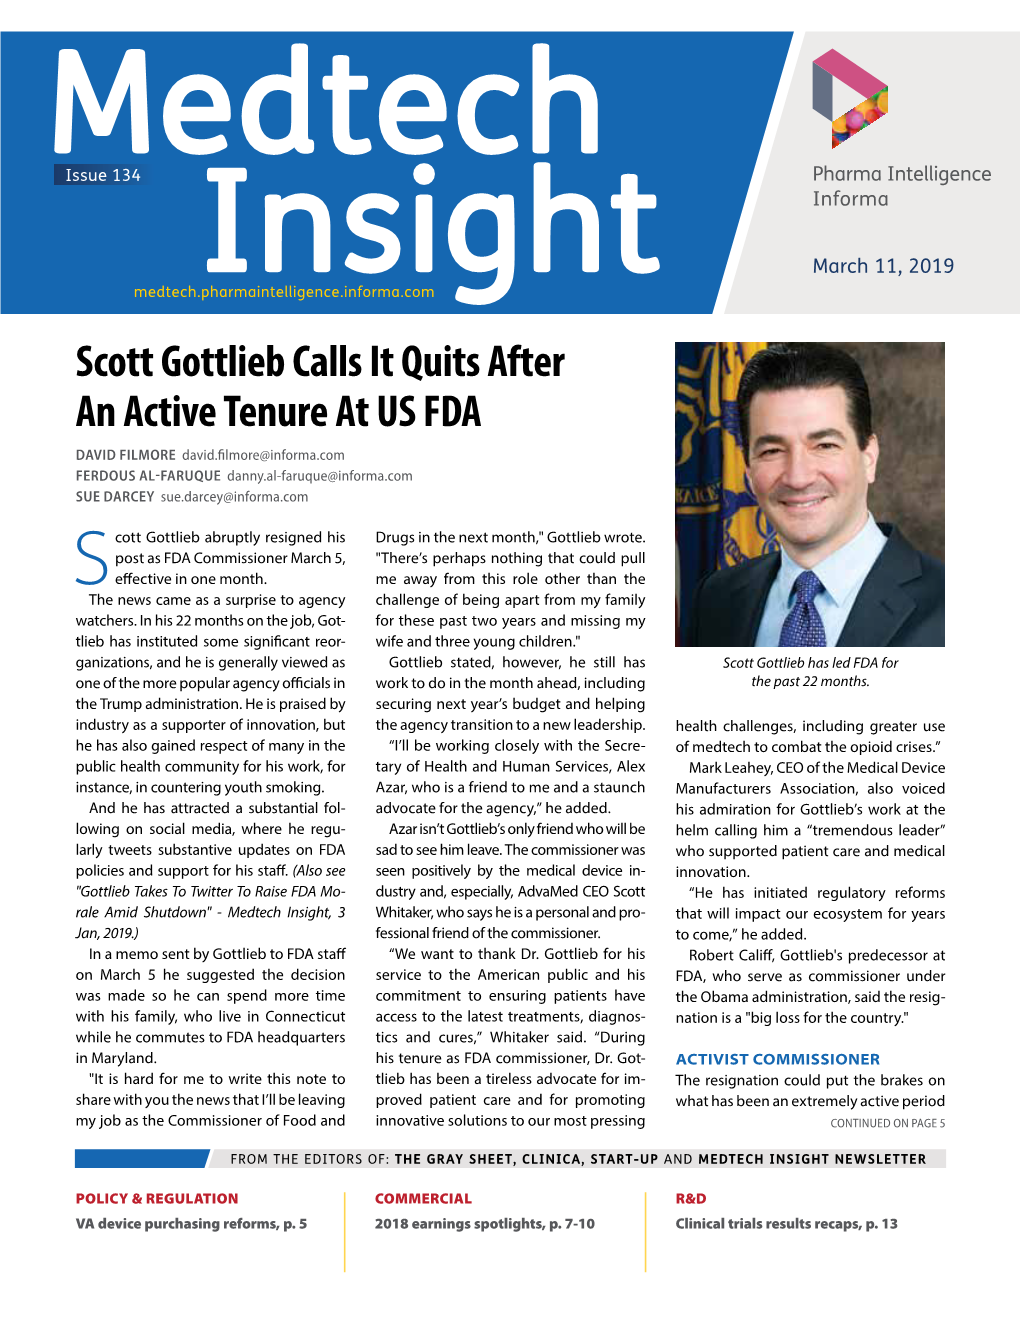 Scott Gottlieb Calls It Quits After an Active Tenure at US